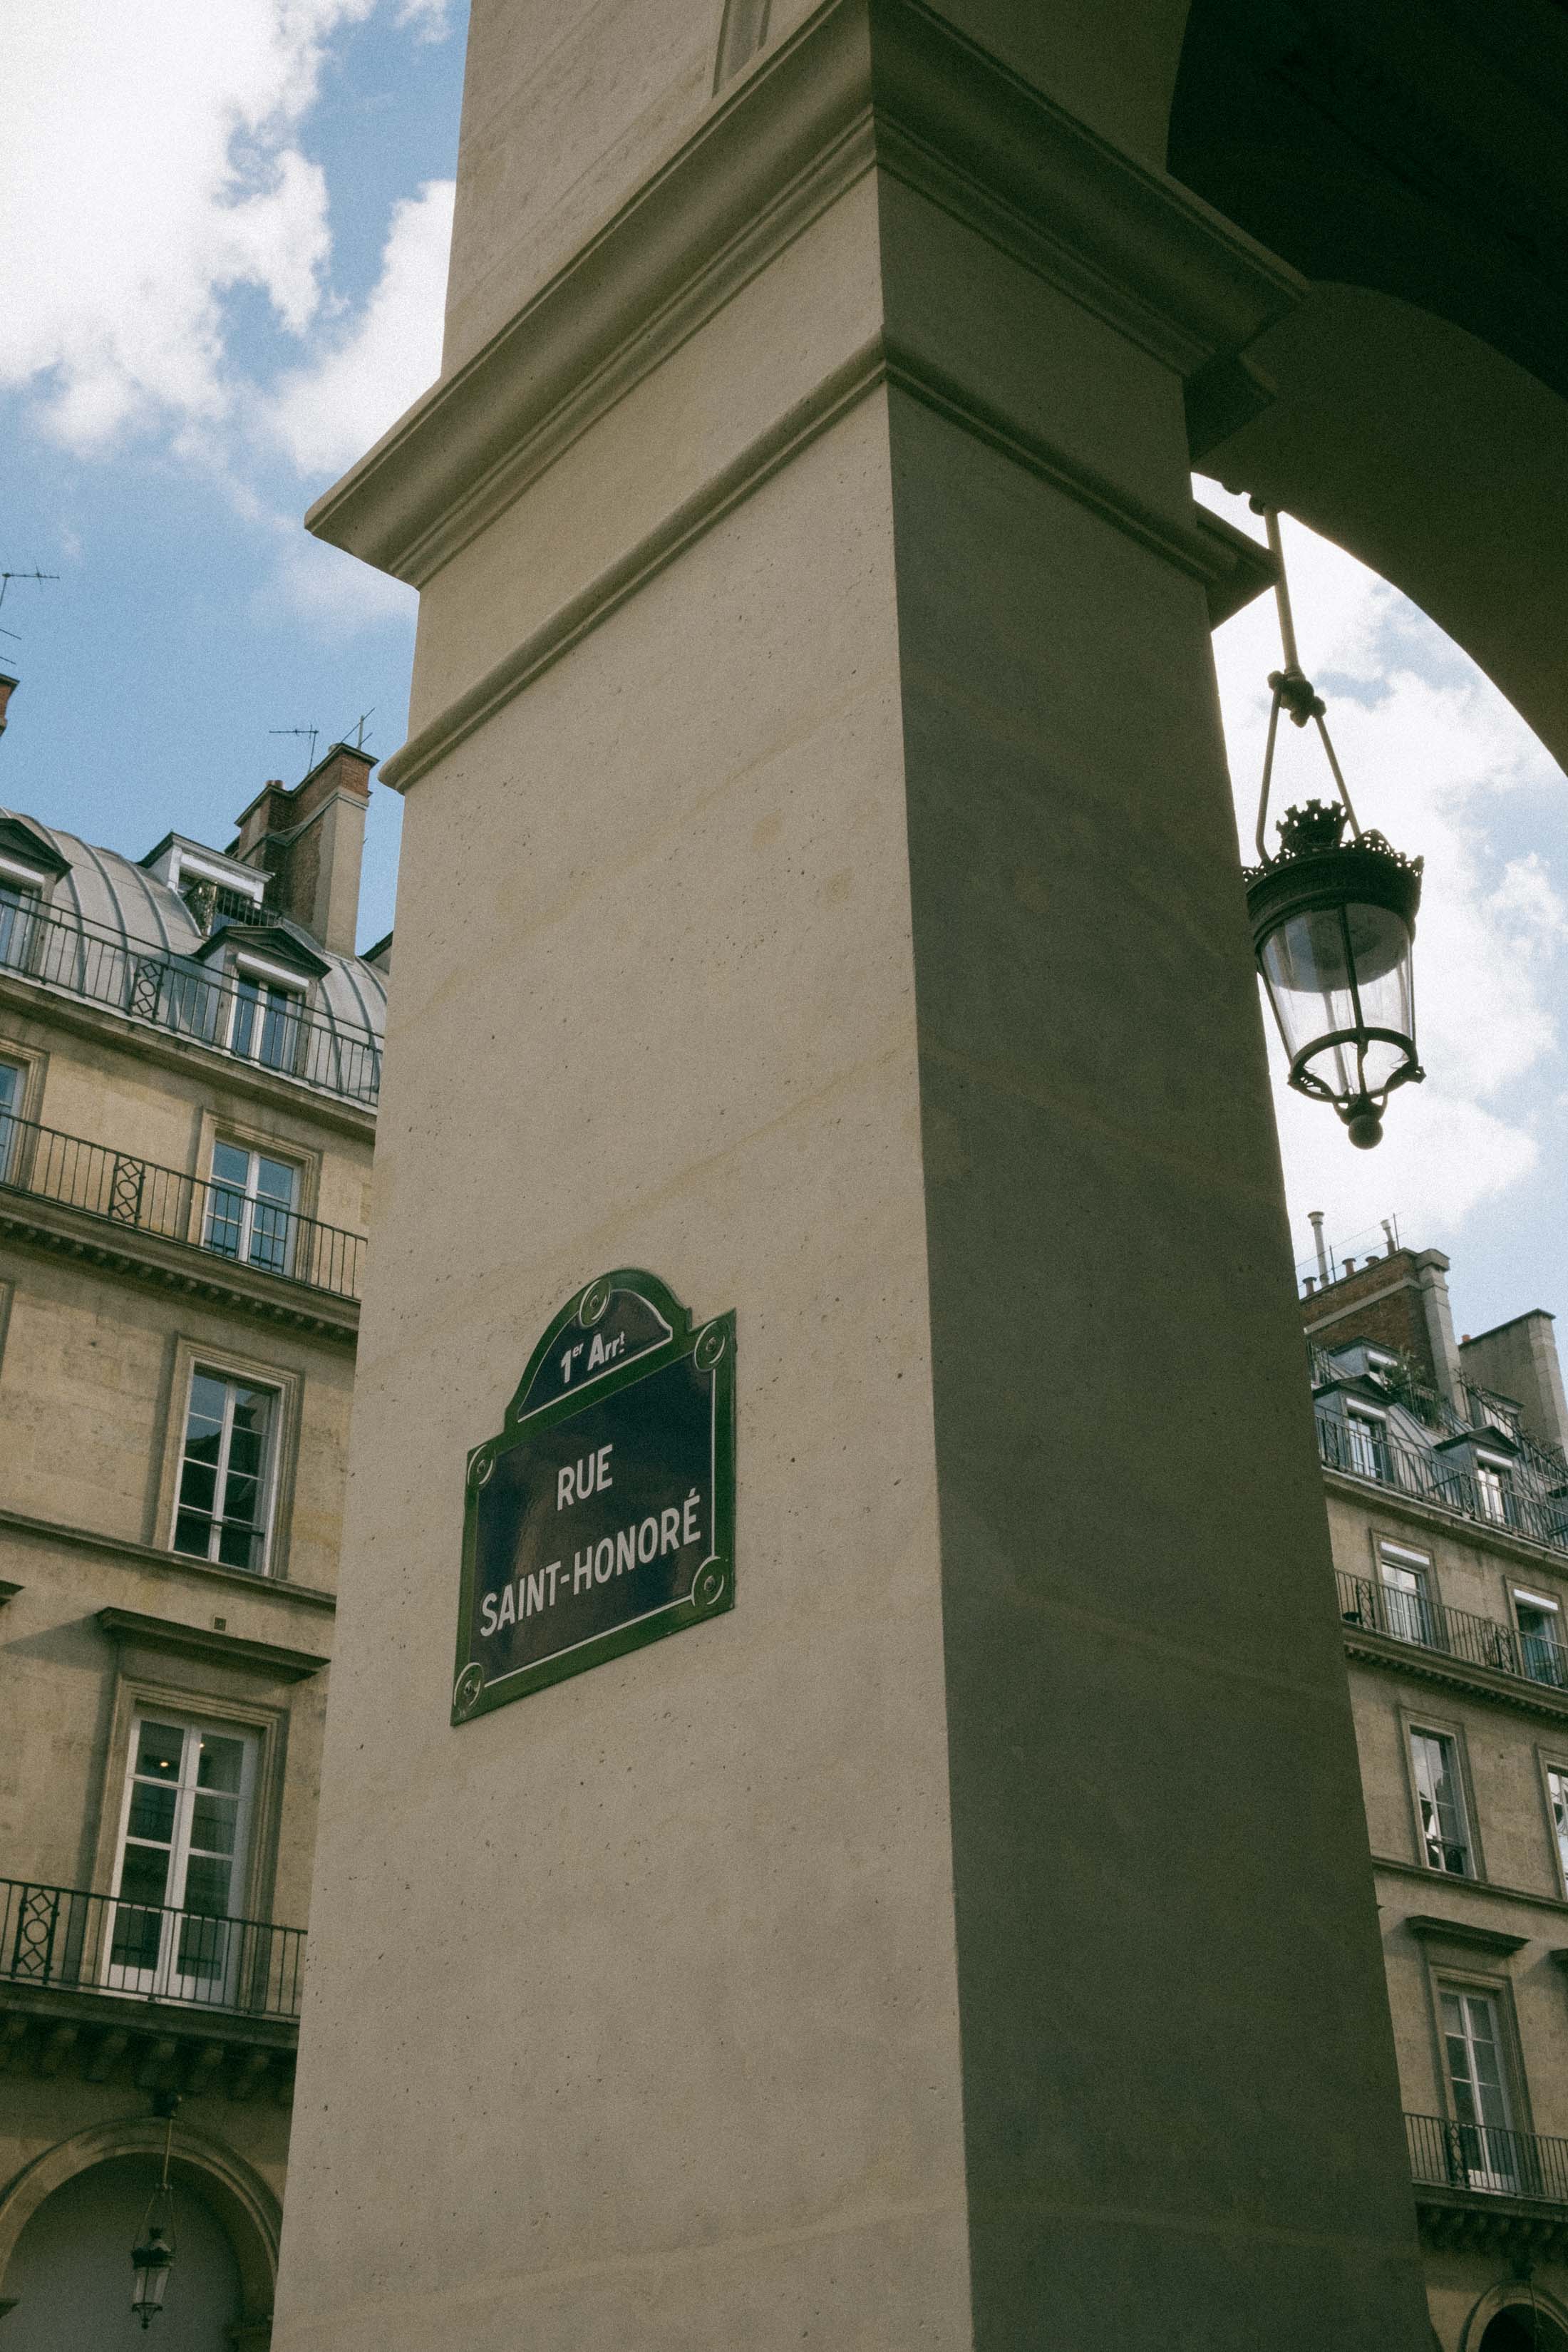 Rue Saint Honoré street sign in Paris